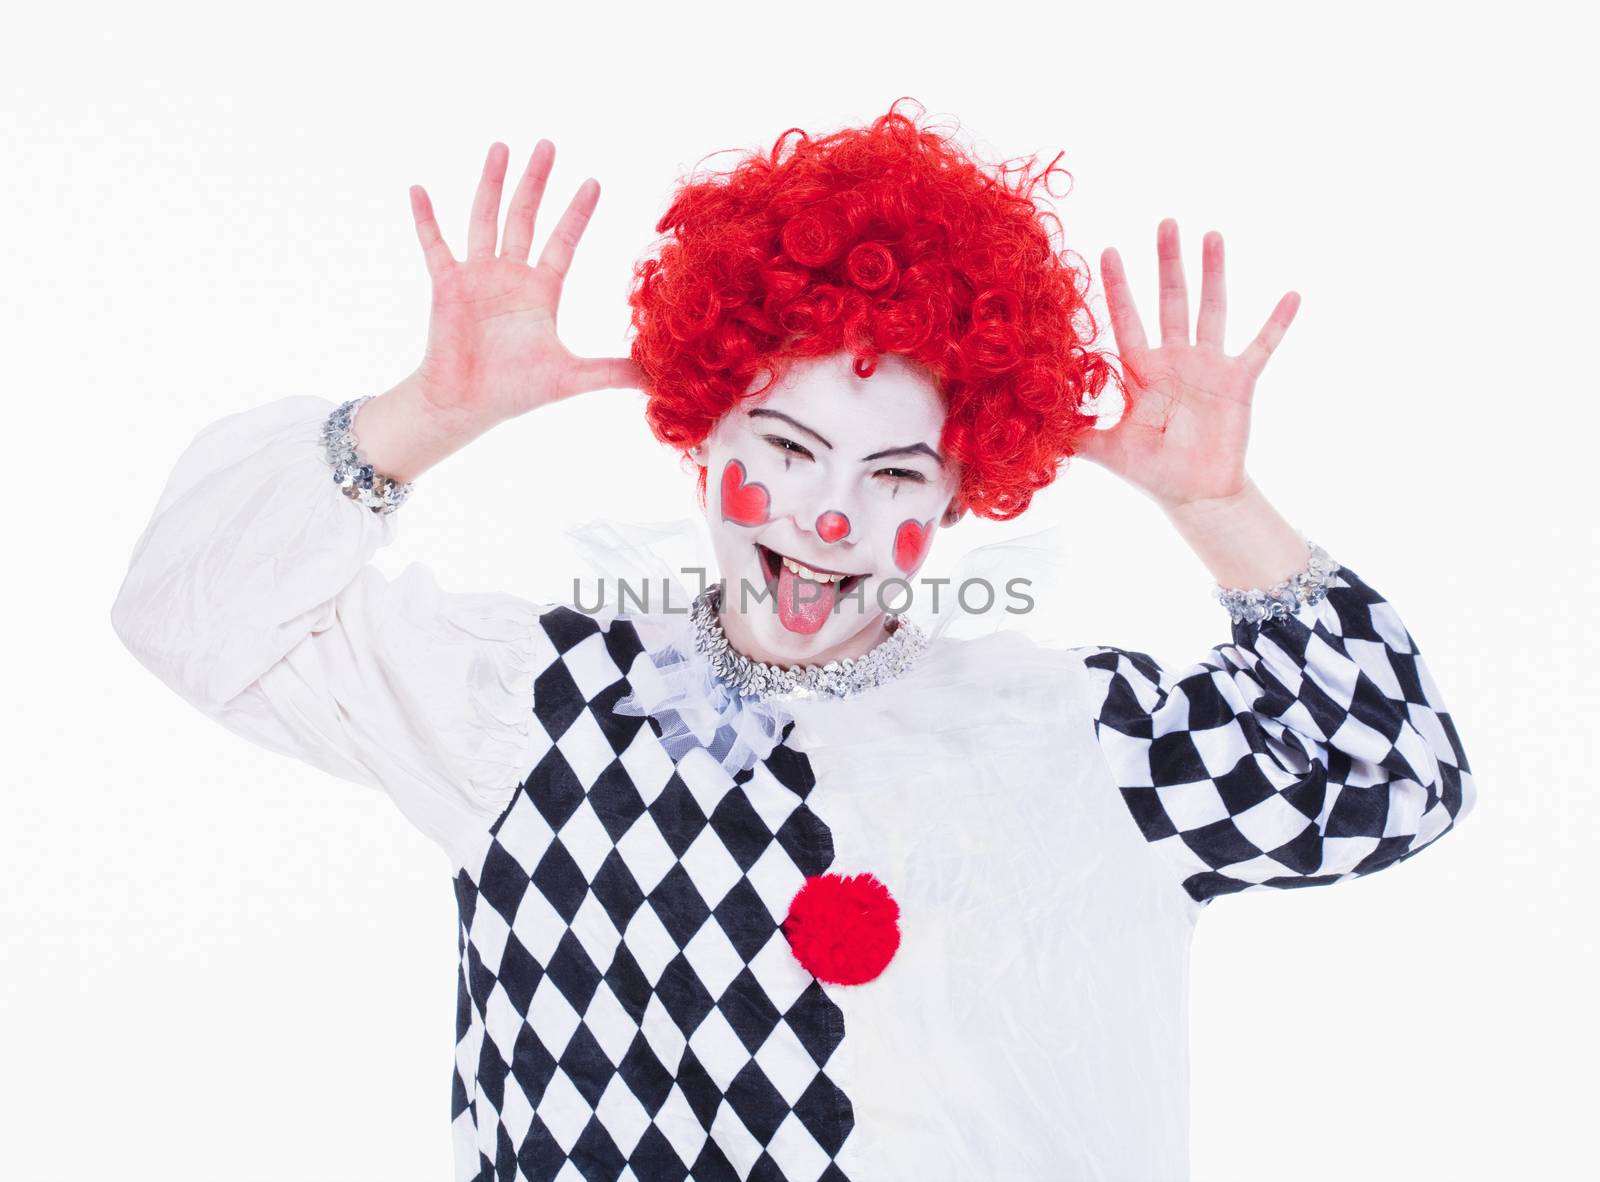 Little Girl in Red Wig Posing as a Clown. by courtyardpix